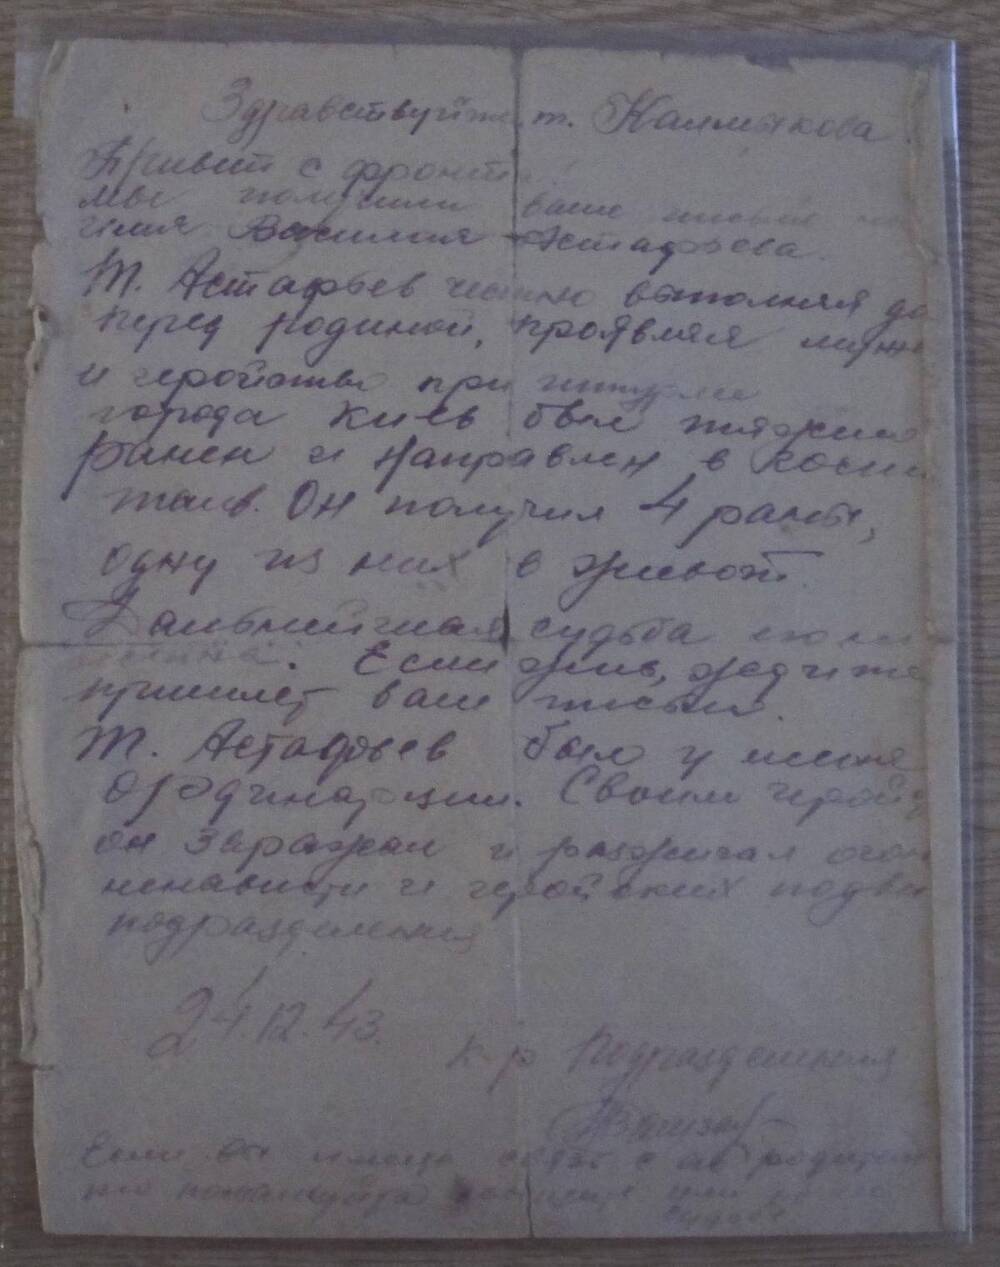 Письмо о смерти Астафьева Василия Петровича (дядя писателя).